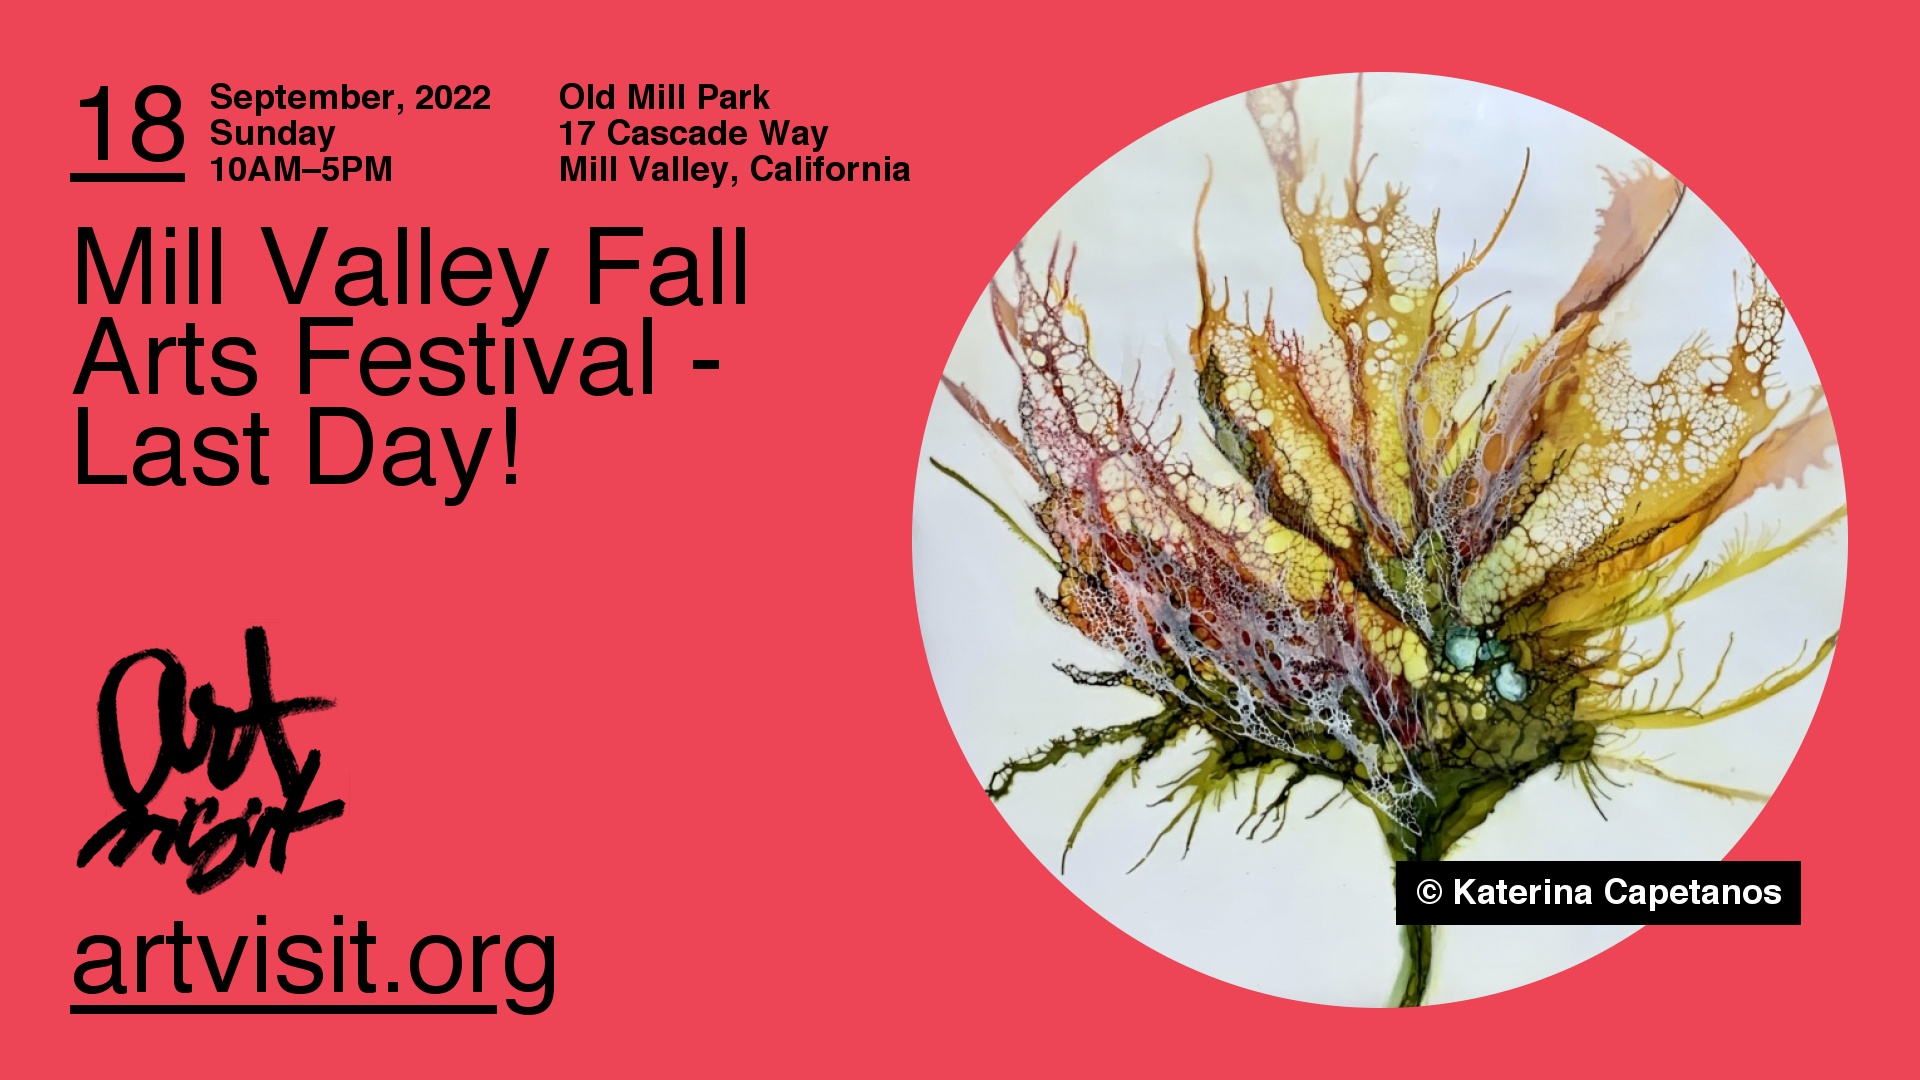 Mill Valley Fall Arts Festival - Last Day!